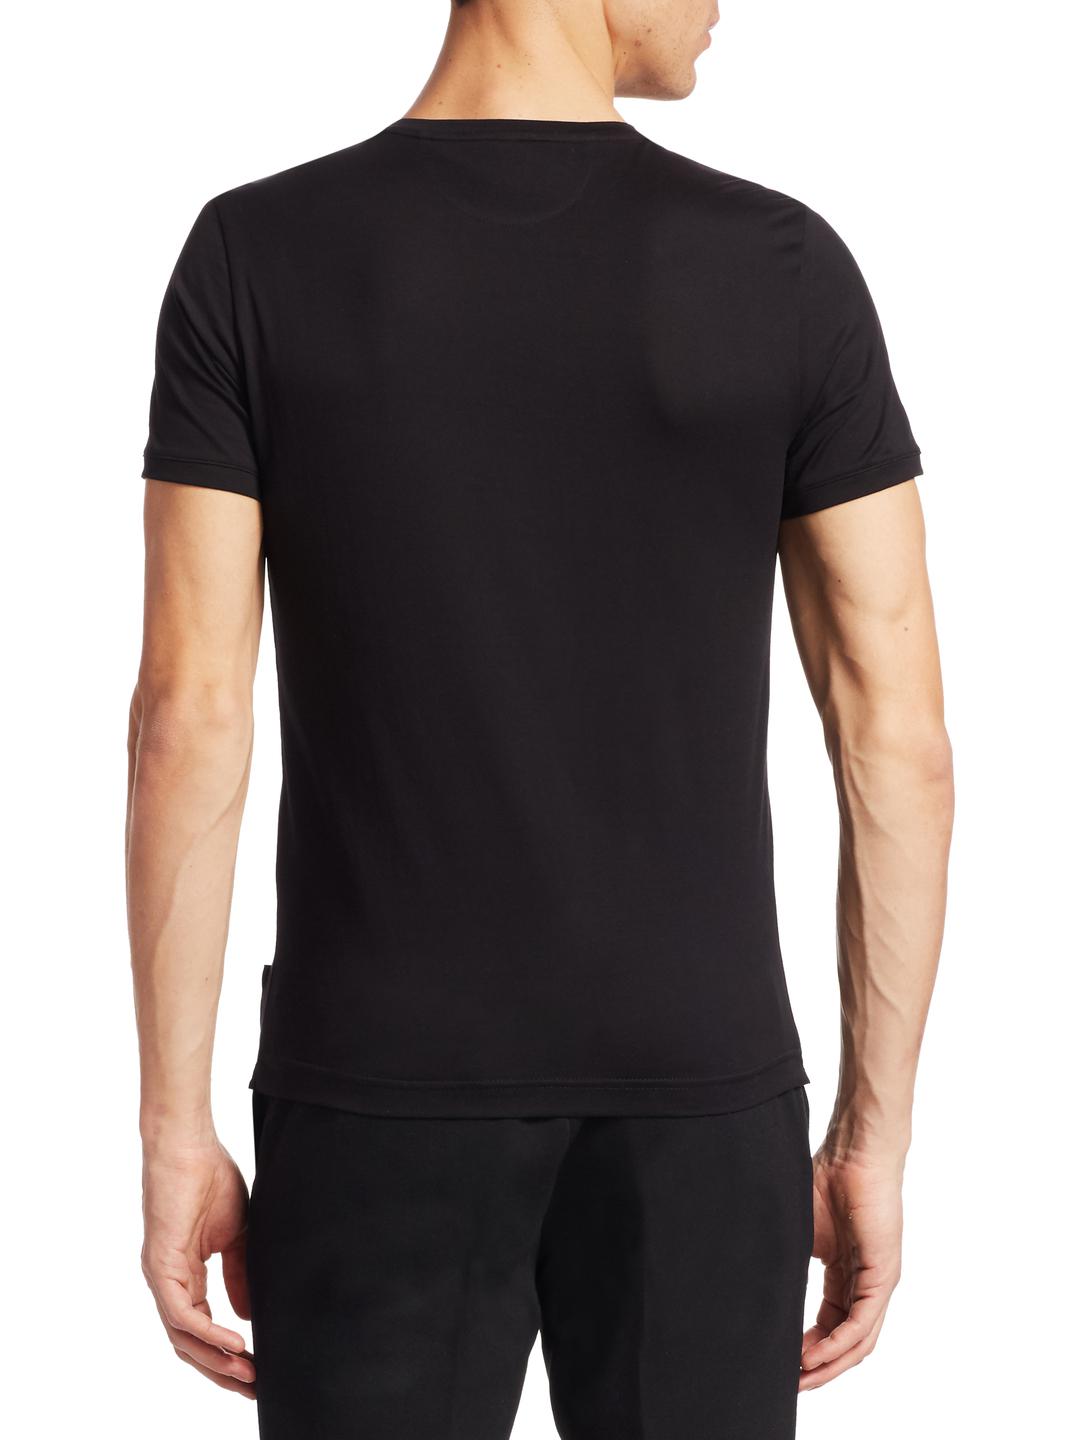 Fendi Cat Eye Embroidery T-shirt in Black for Men - Lyst